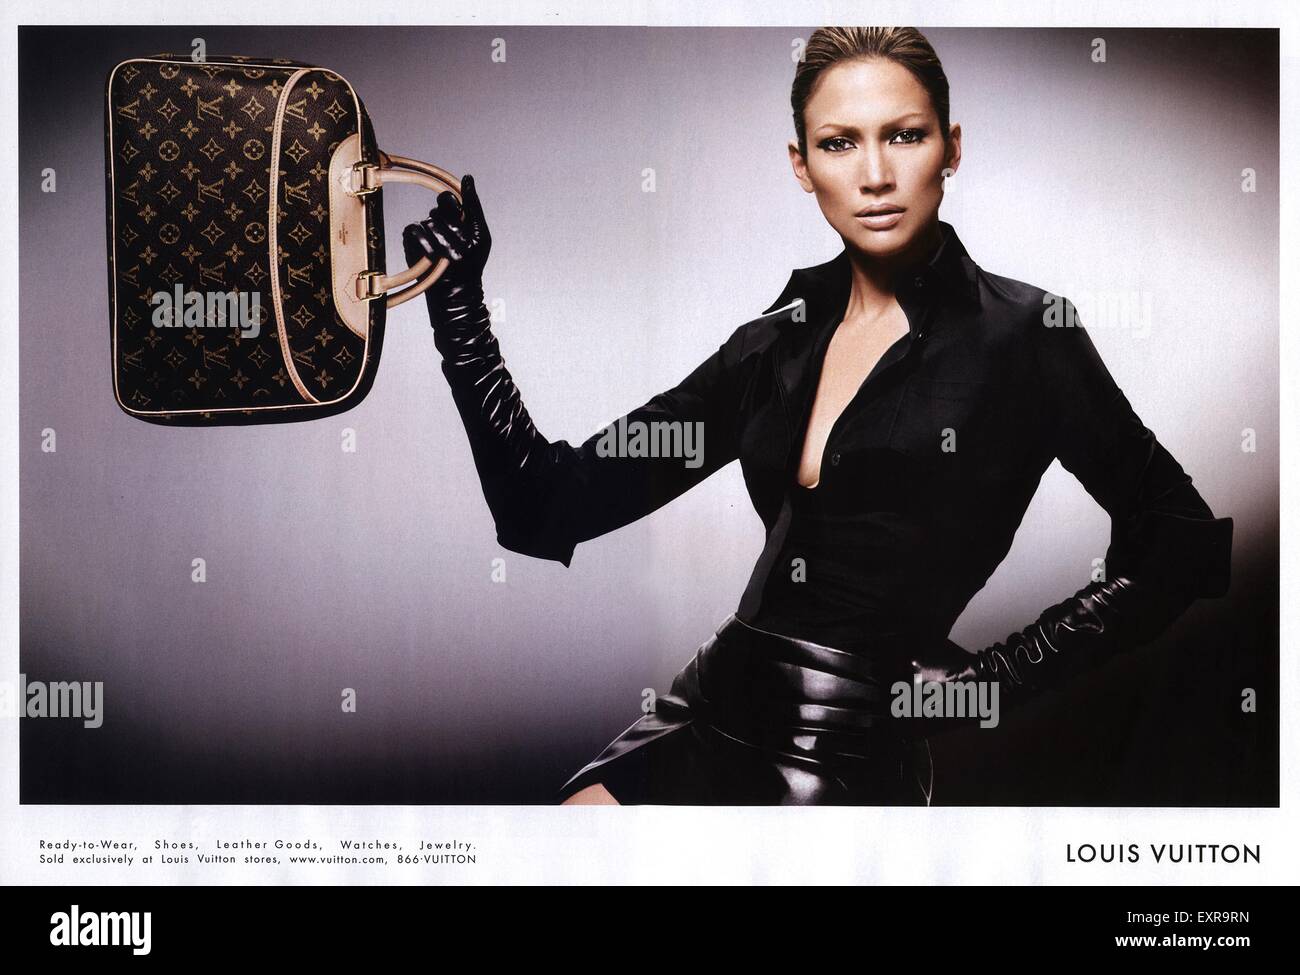 2000s USA Louis Vuitton Magazine Advert Stock Photo, Royalty Free Image: 85335145 - Alamy